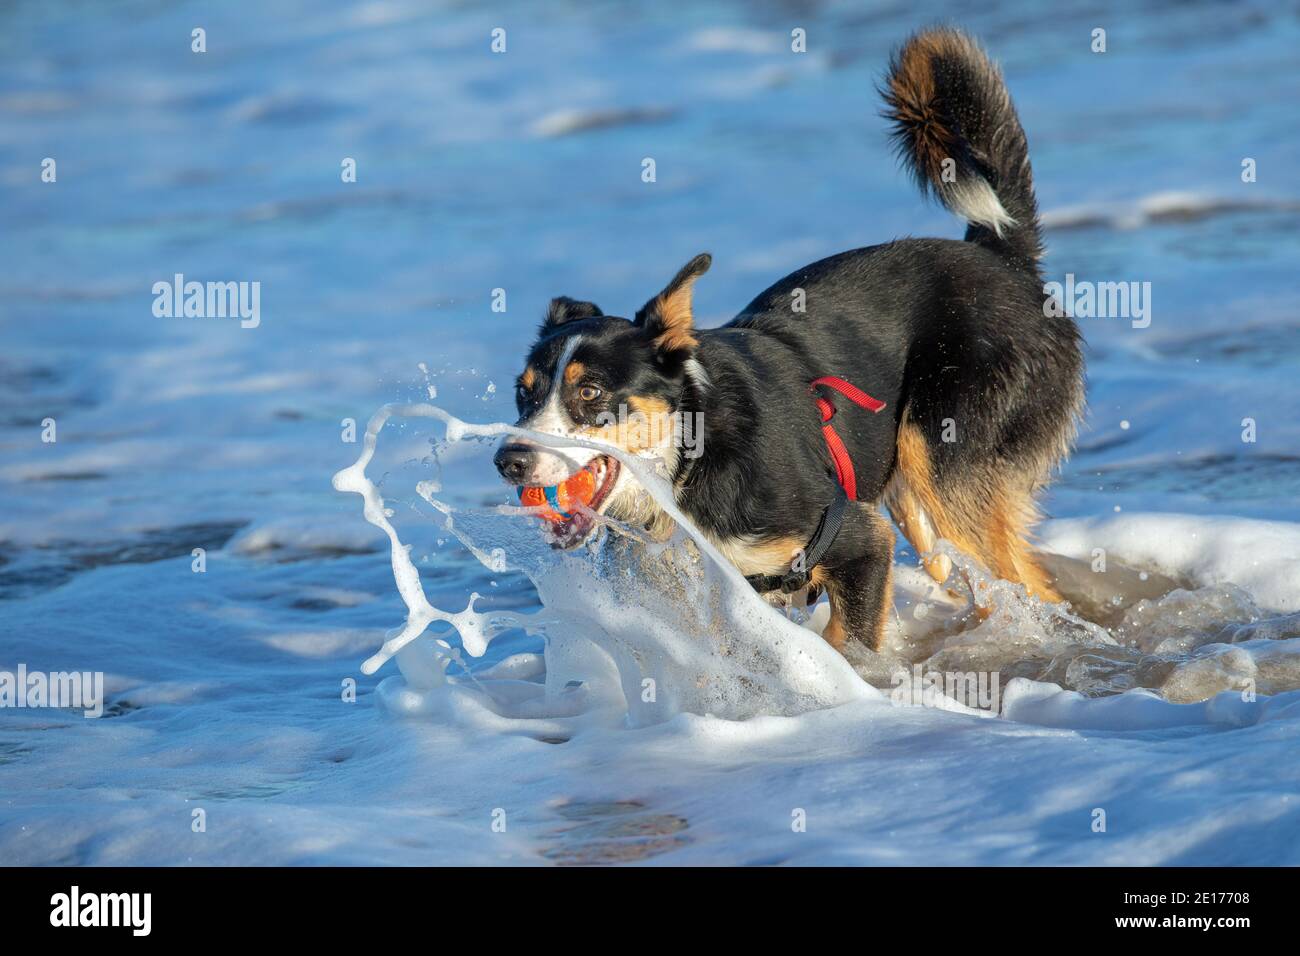 Tri-colored Border Collie Dog (Canis familiaris). Animal doméstico, mascota, compañero, raza pastora. Recoger, llevar la bola en la boca. Lado del mar. Foto de stock